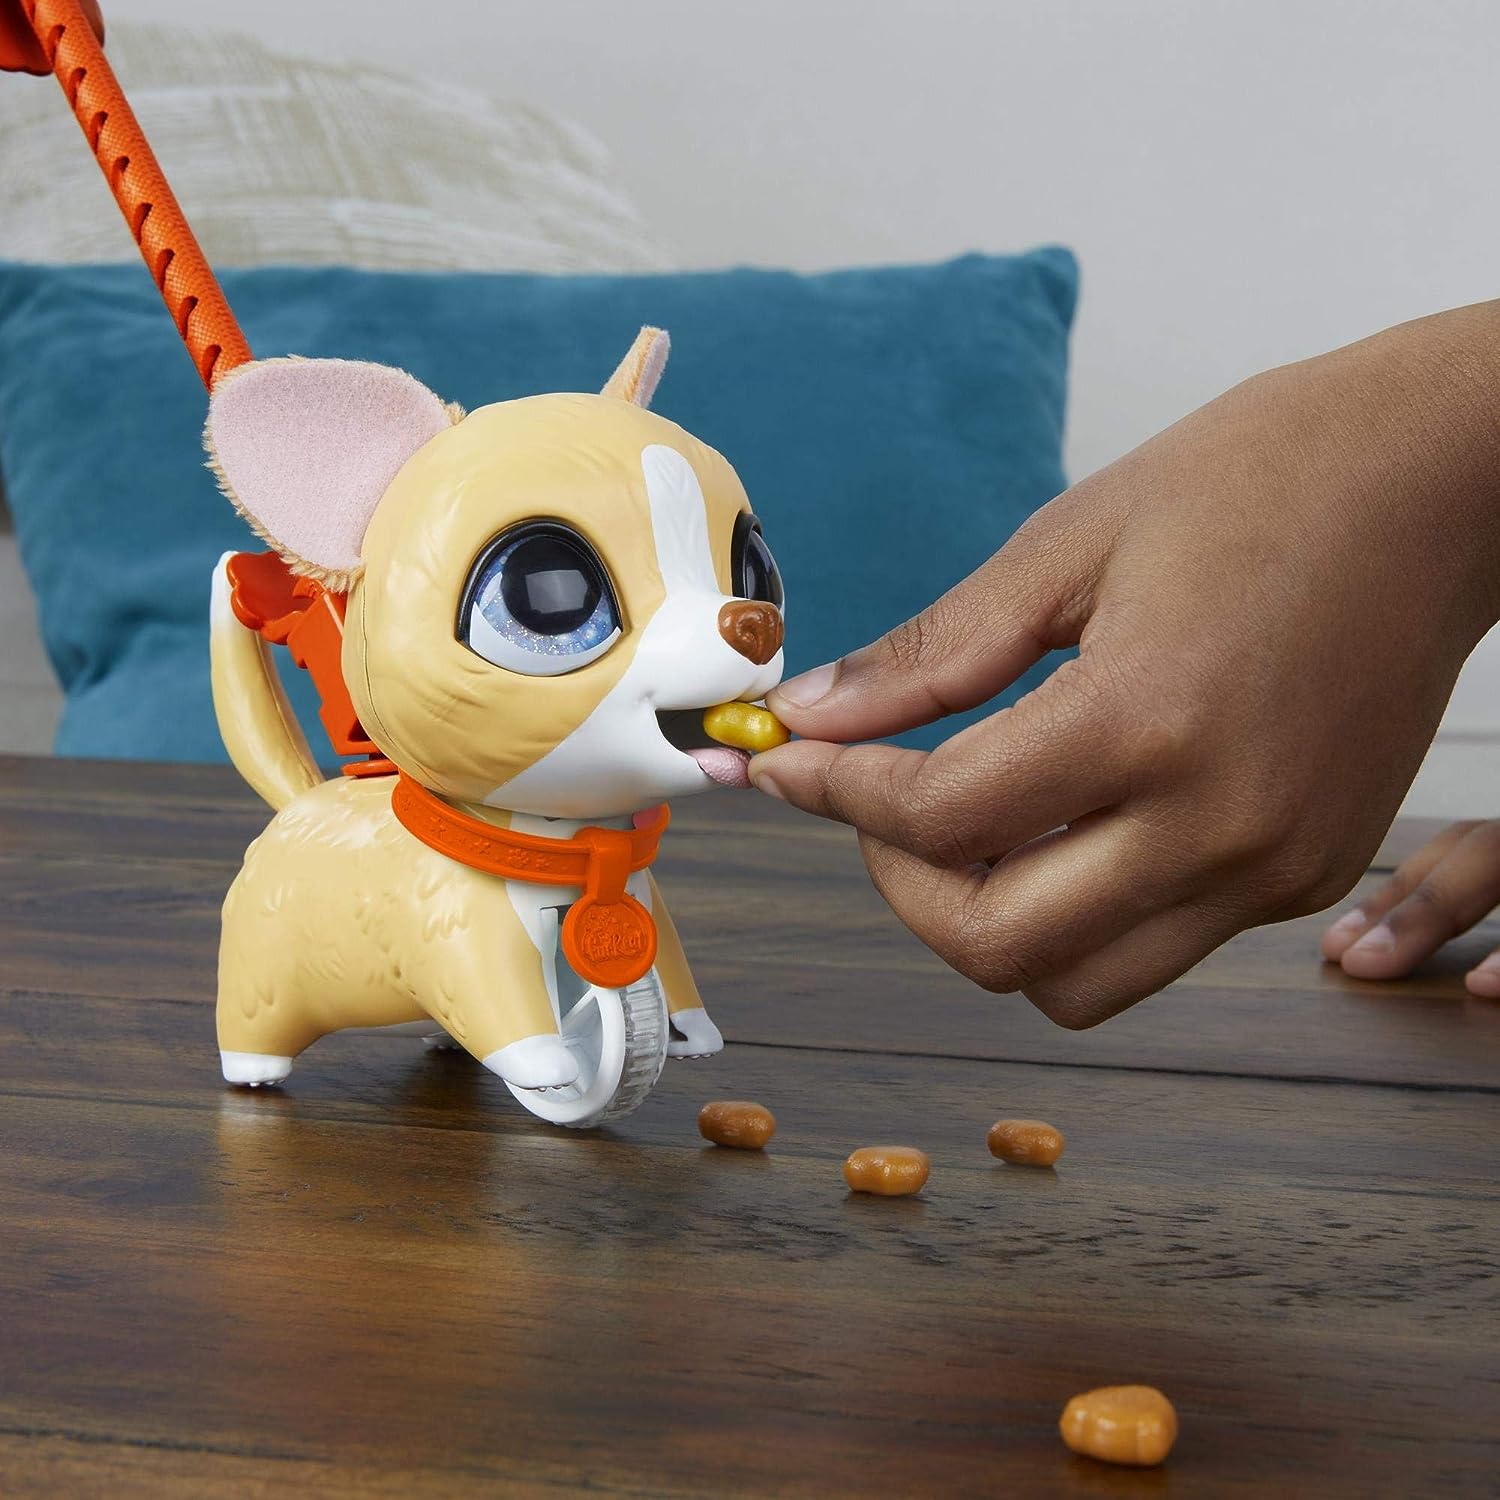 Hasbro FurReal Interactive Pet Toy